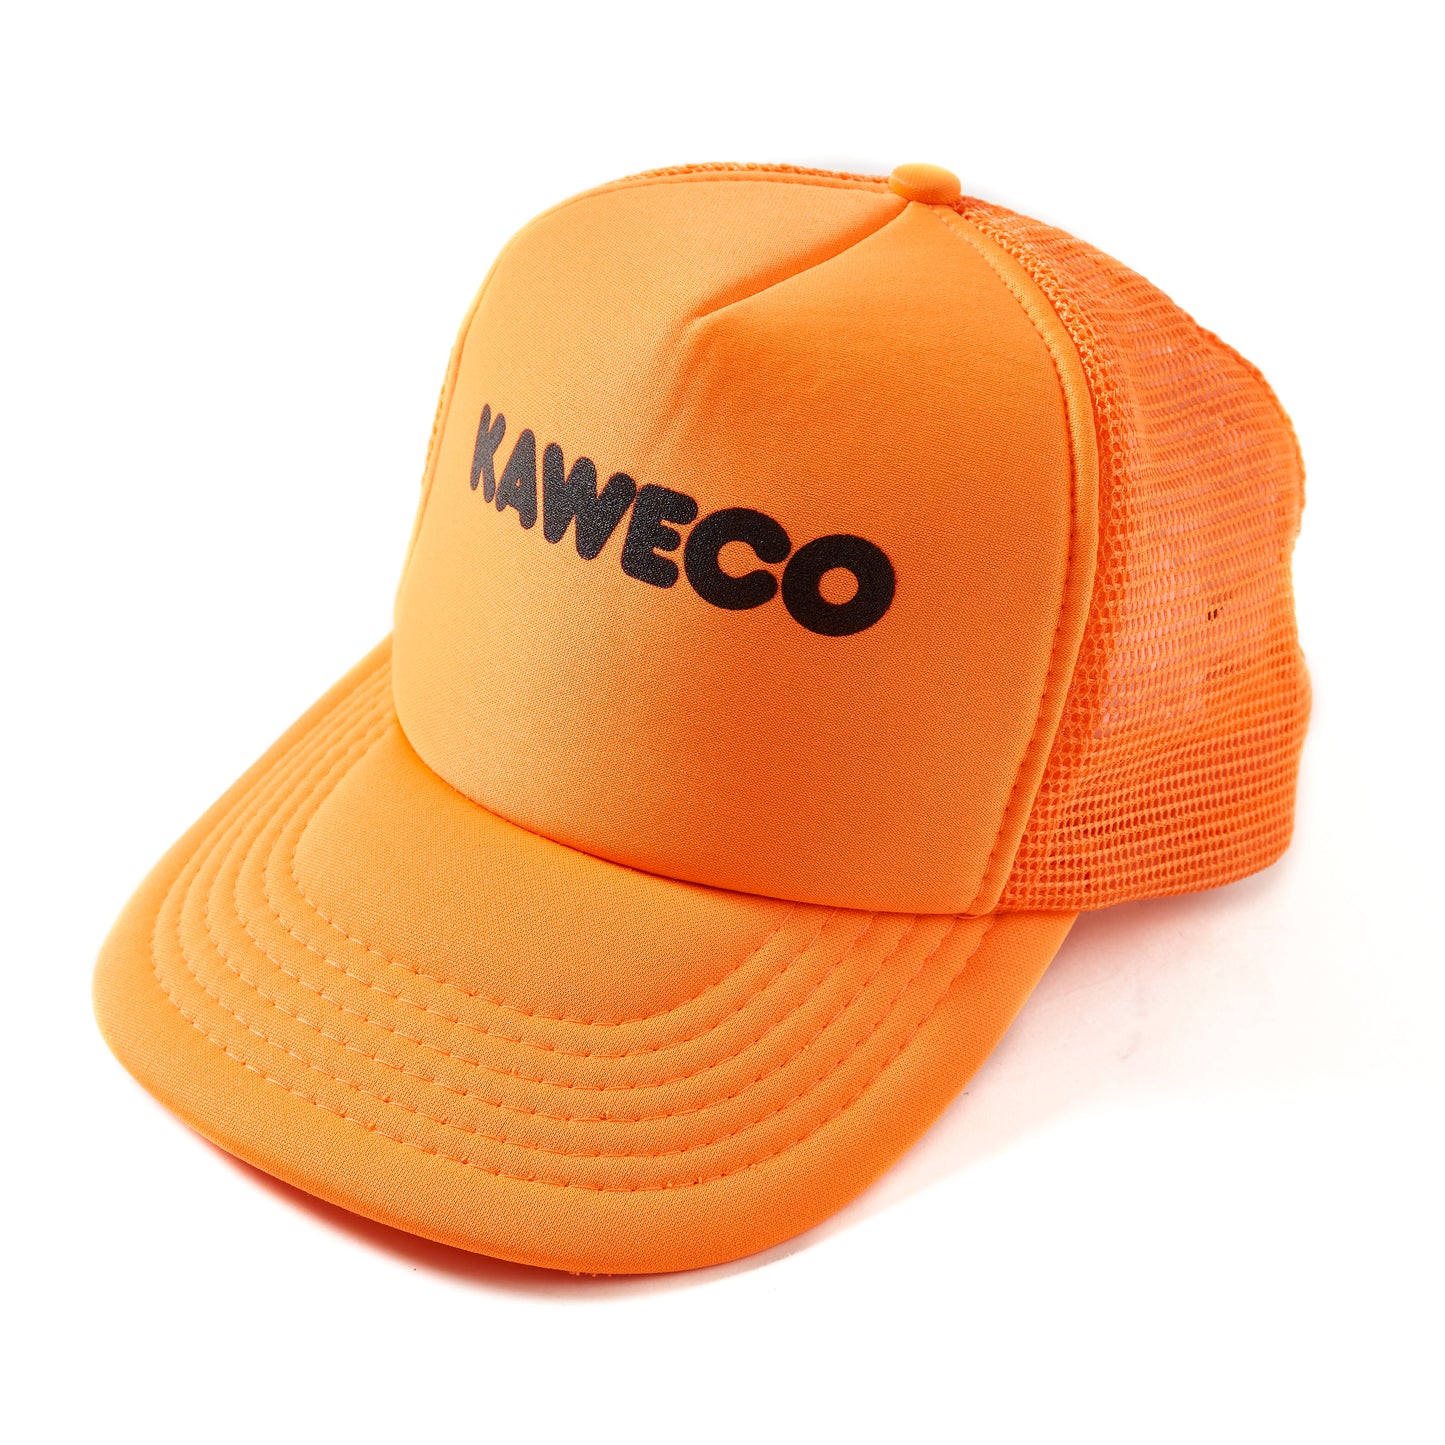 Vintage Kaweco Trucker Hat